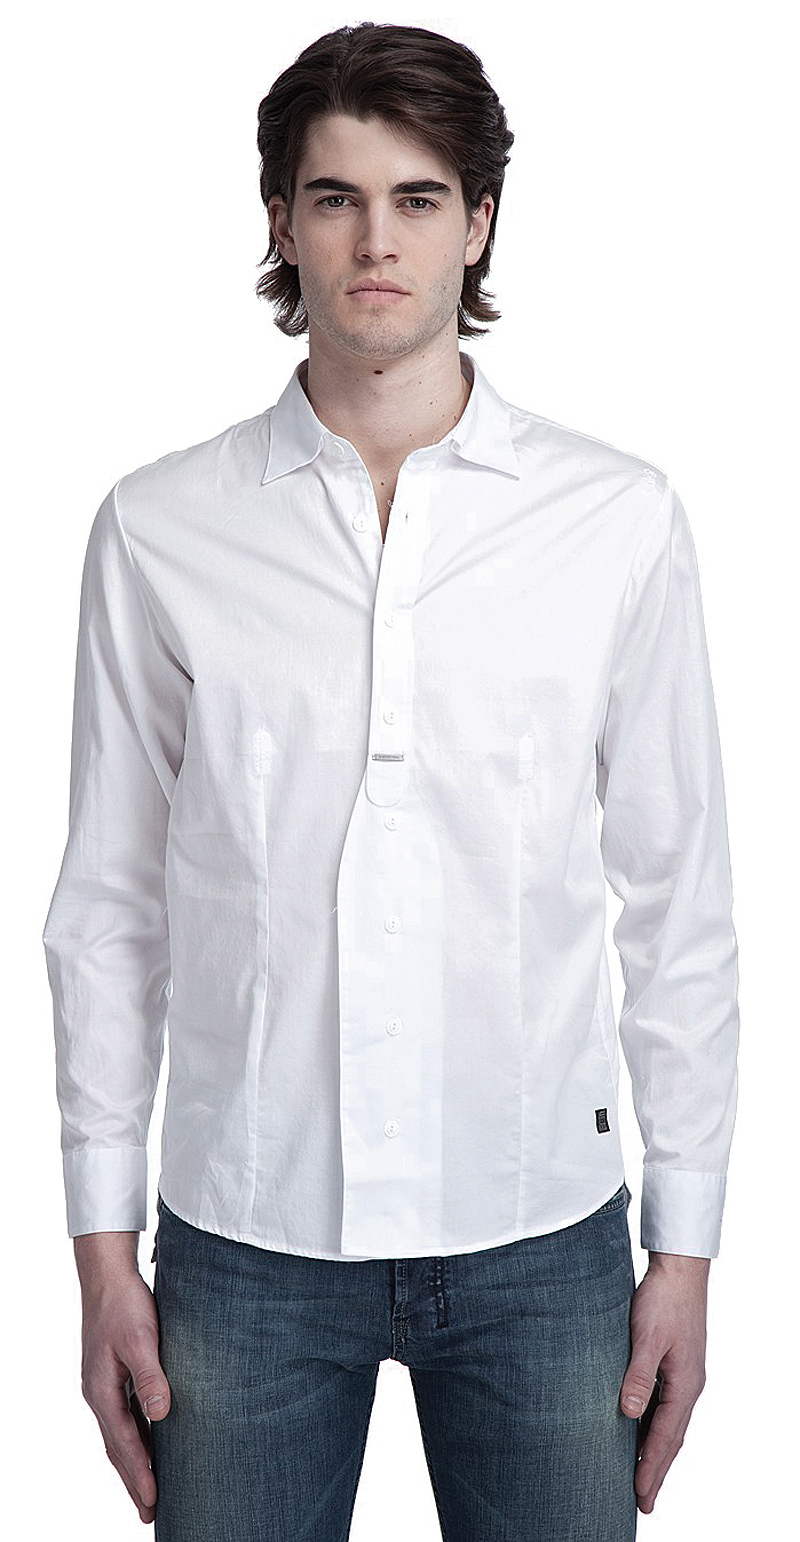 wardrobe - his stupid white shirt